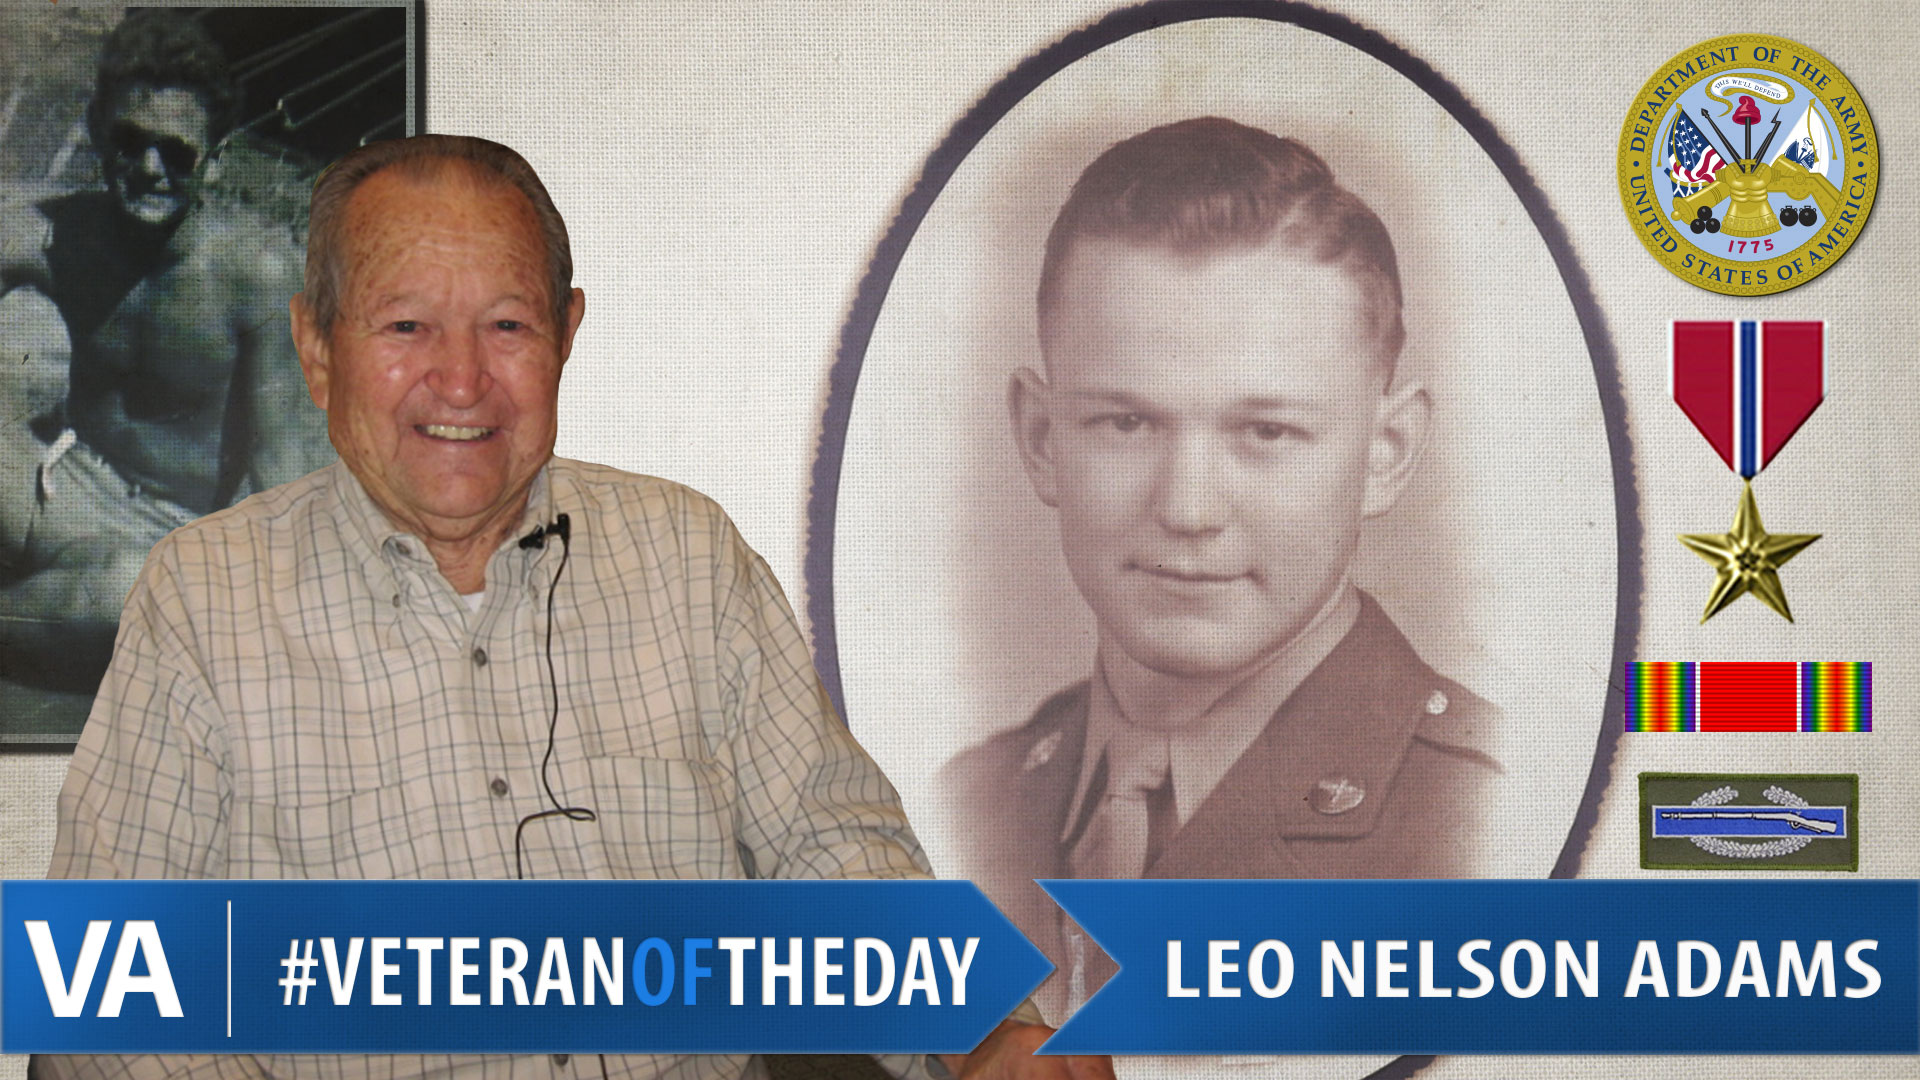 Leo Nelson Adams - Veteran of the Day